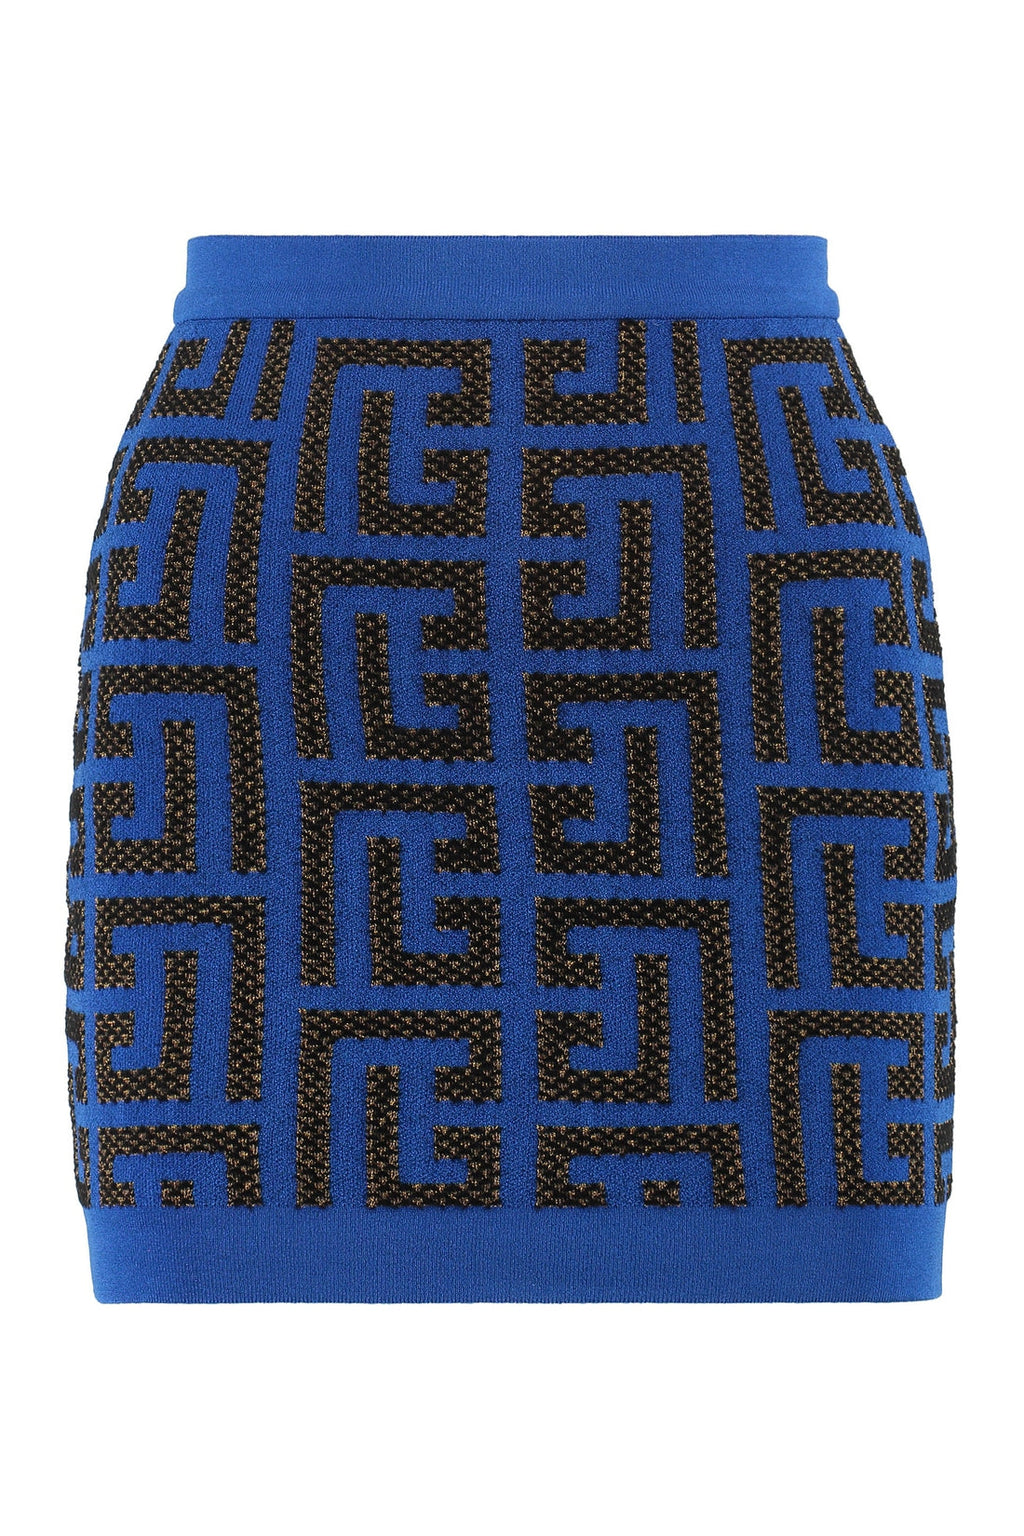 Balmain-OUTLET-SALE-Knitted mini skirt-ARCHIVIST